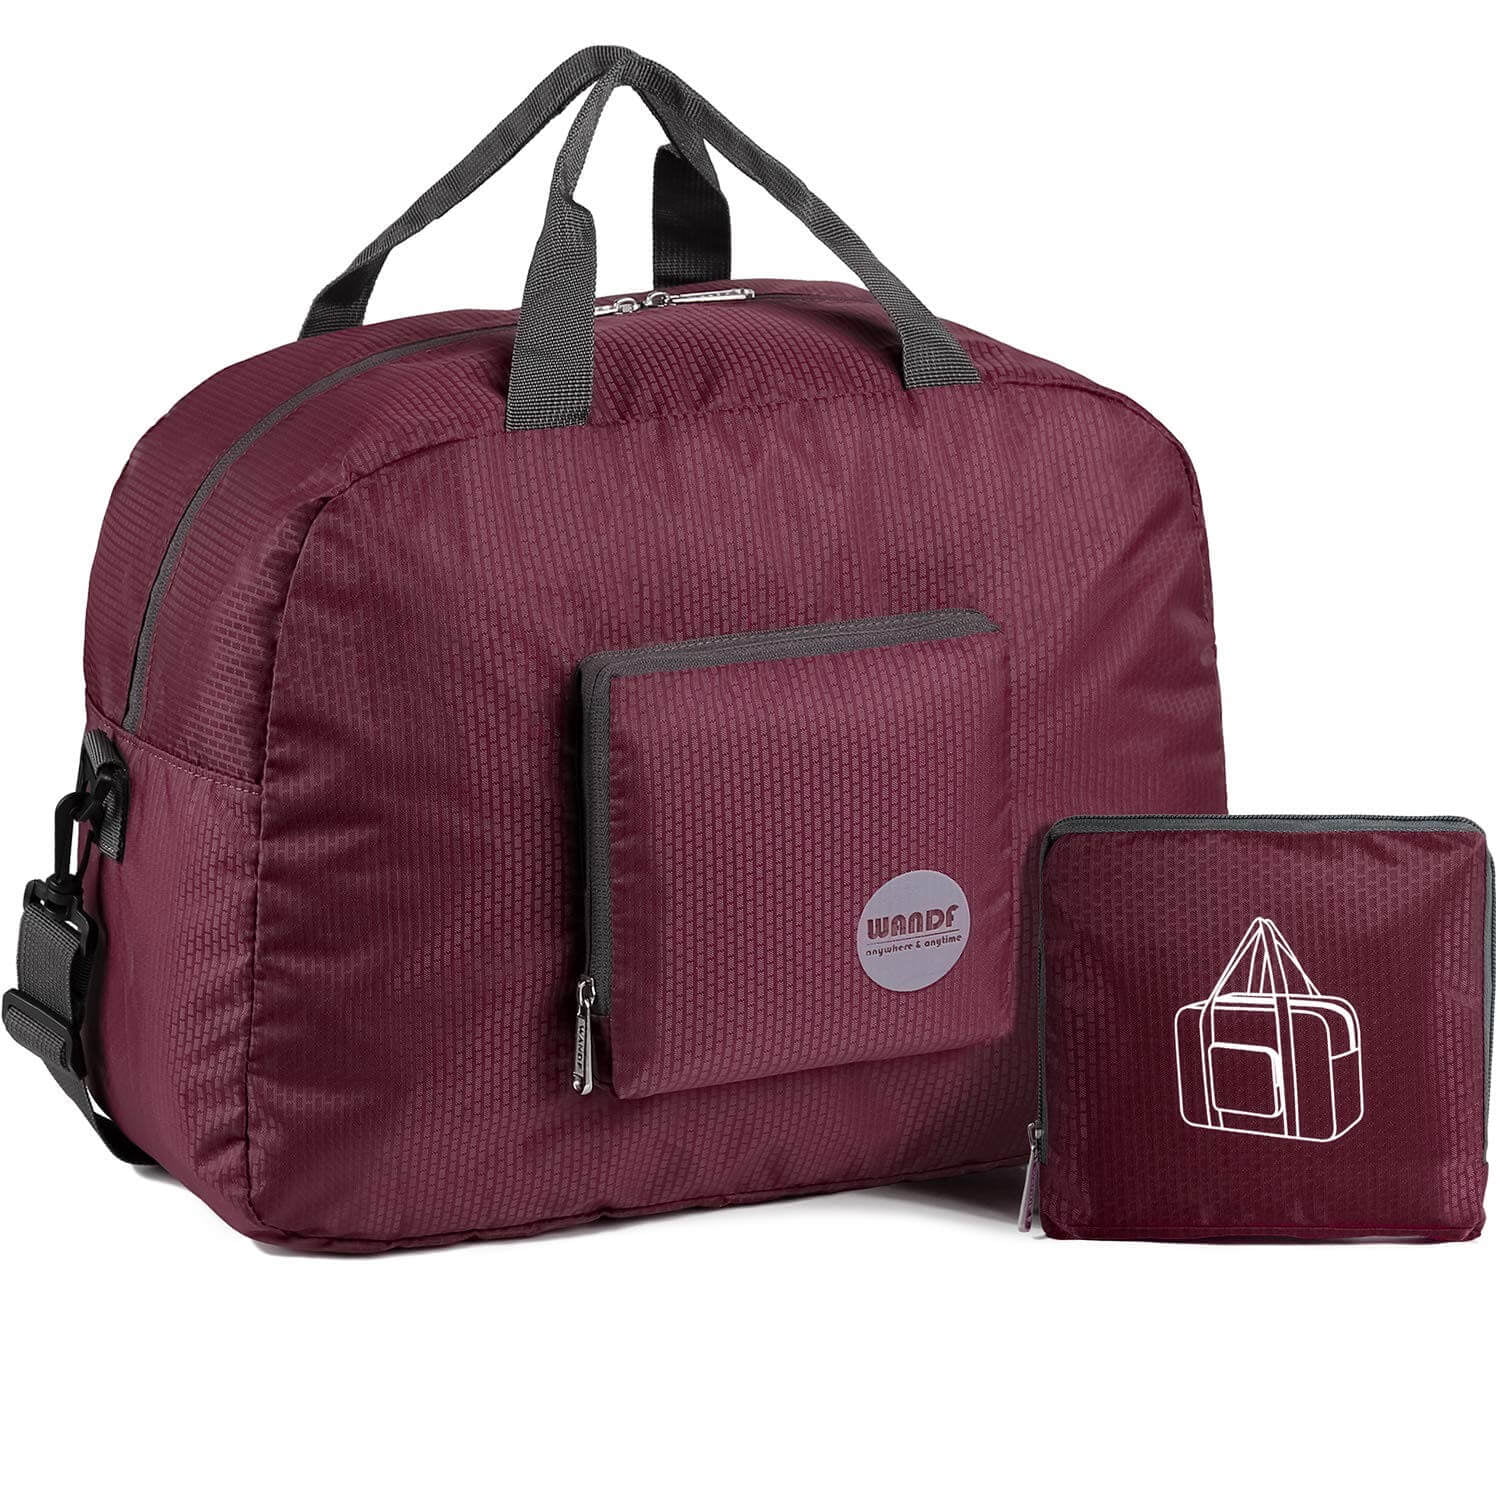 WANDF Foldable Duffle Bag 16&quot; Small Travel Gym Sports Lightweight Luggage Duffel Bags 20L Wine ...